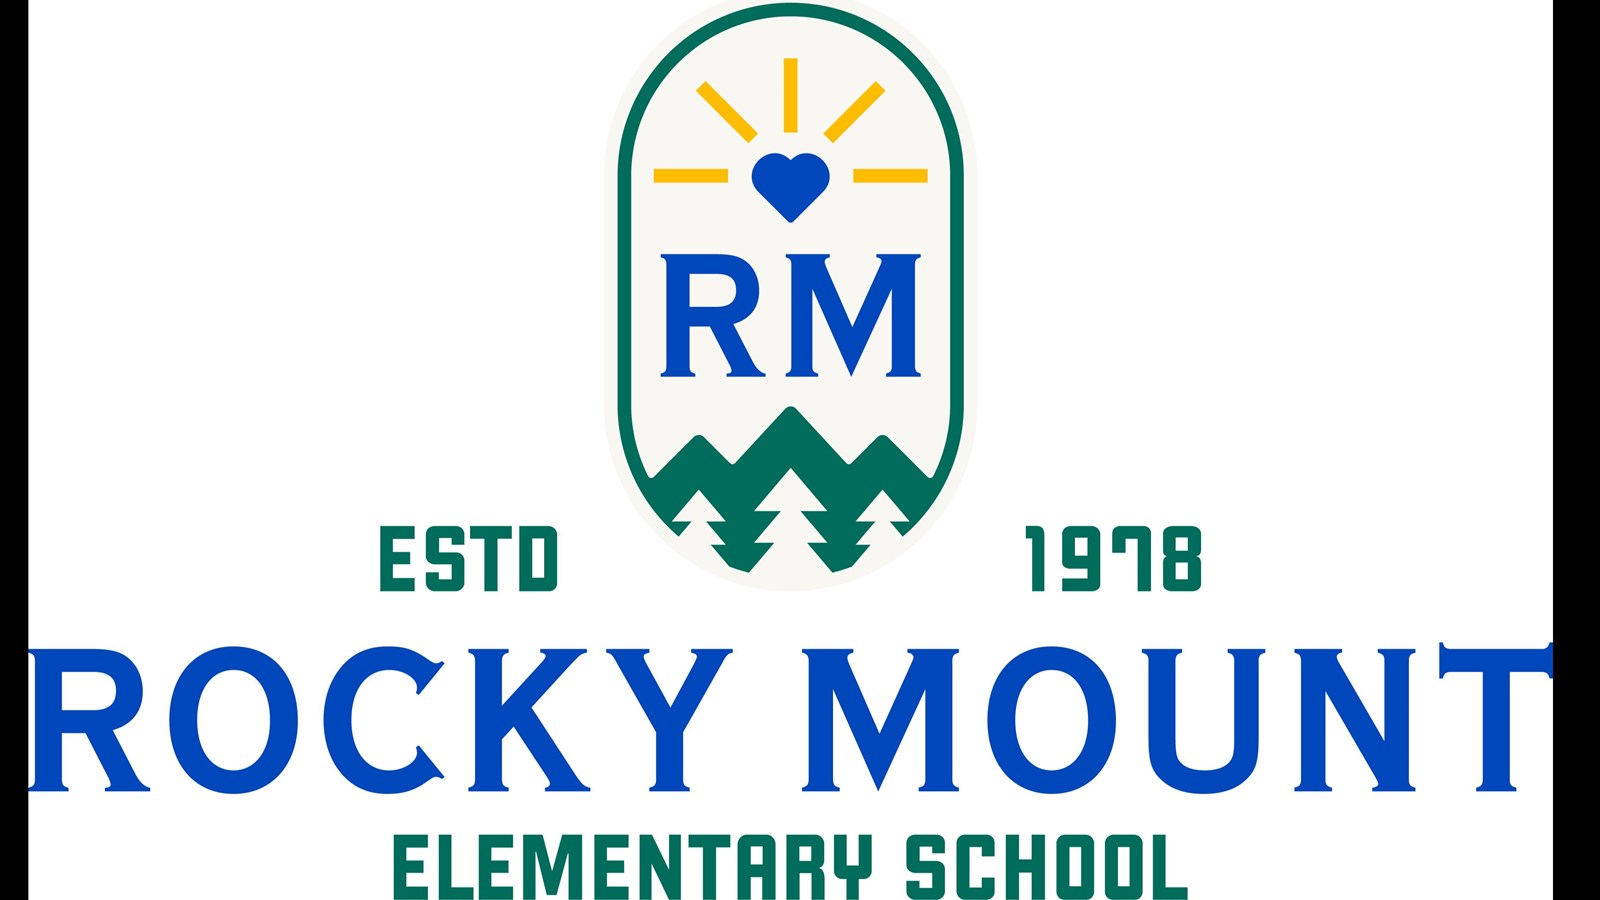 Rocky Mount Logo